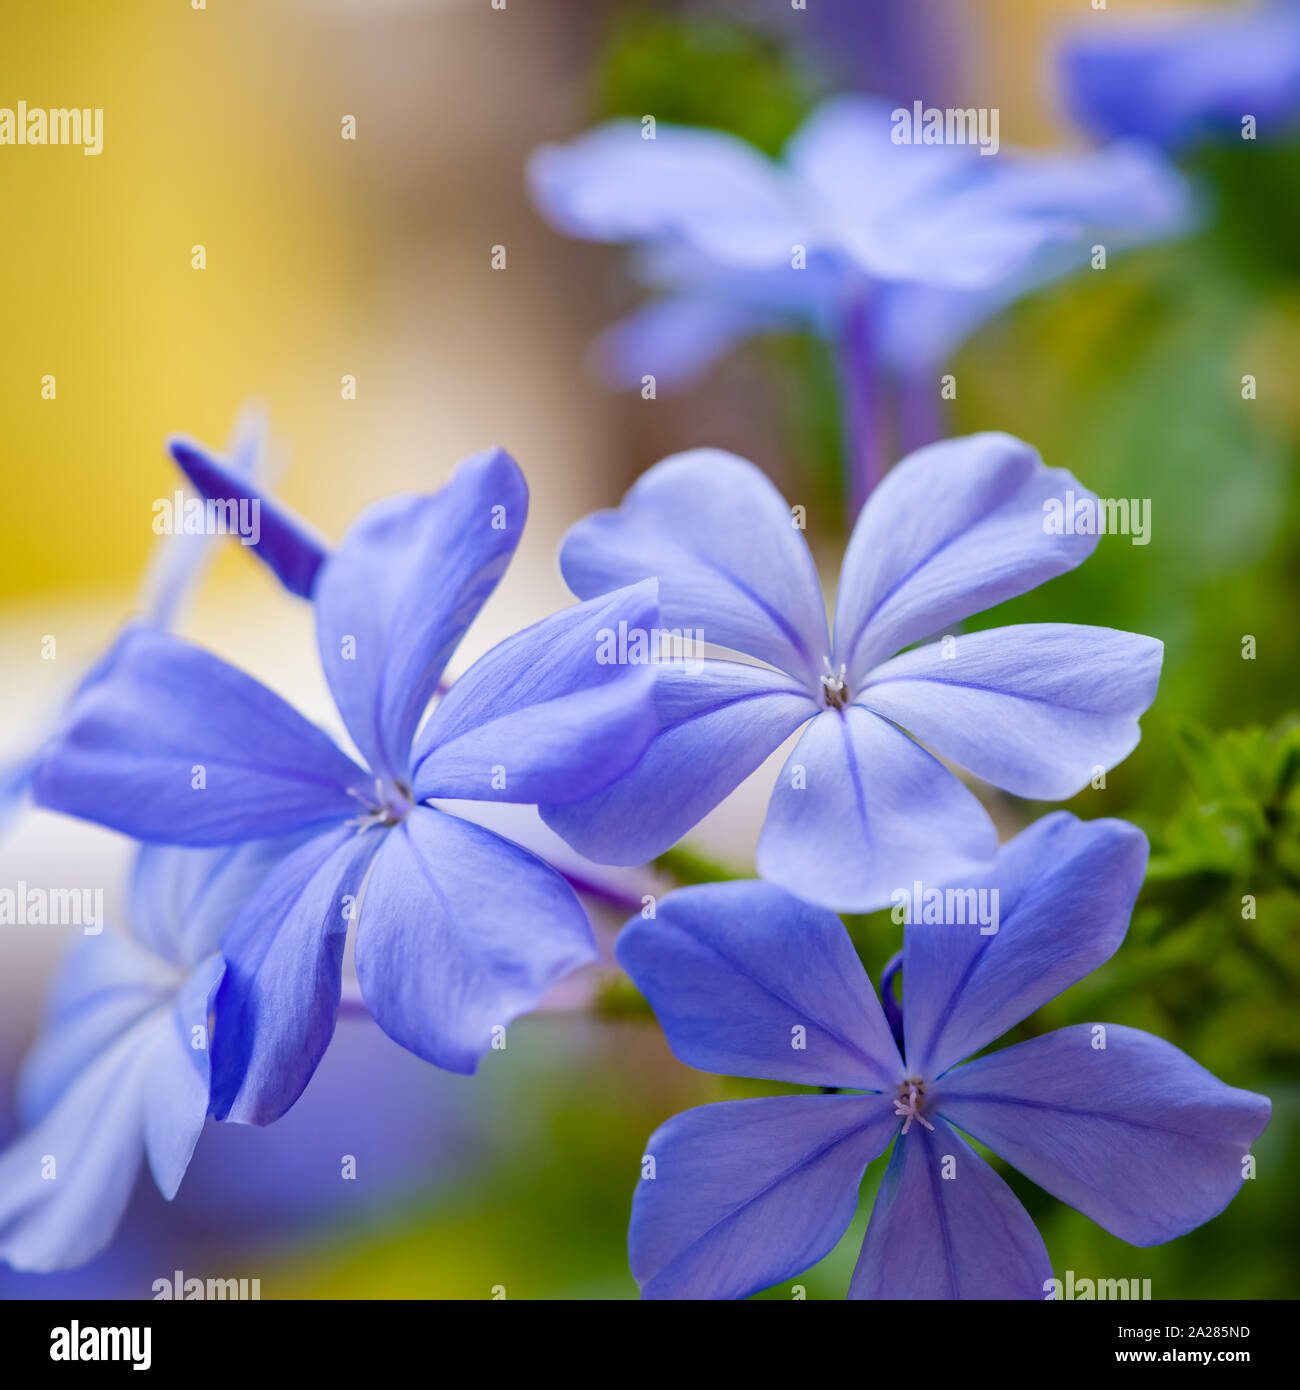 blue plumbago blooming blossom closeup clusters macro purple decorative plant flower Stock Photo